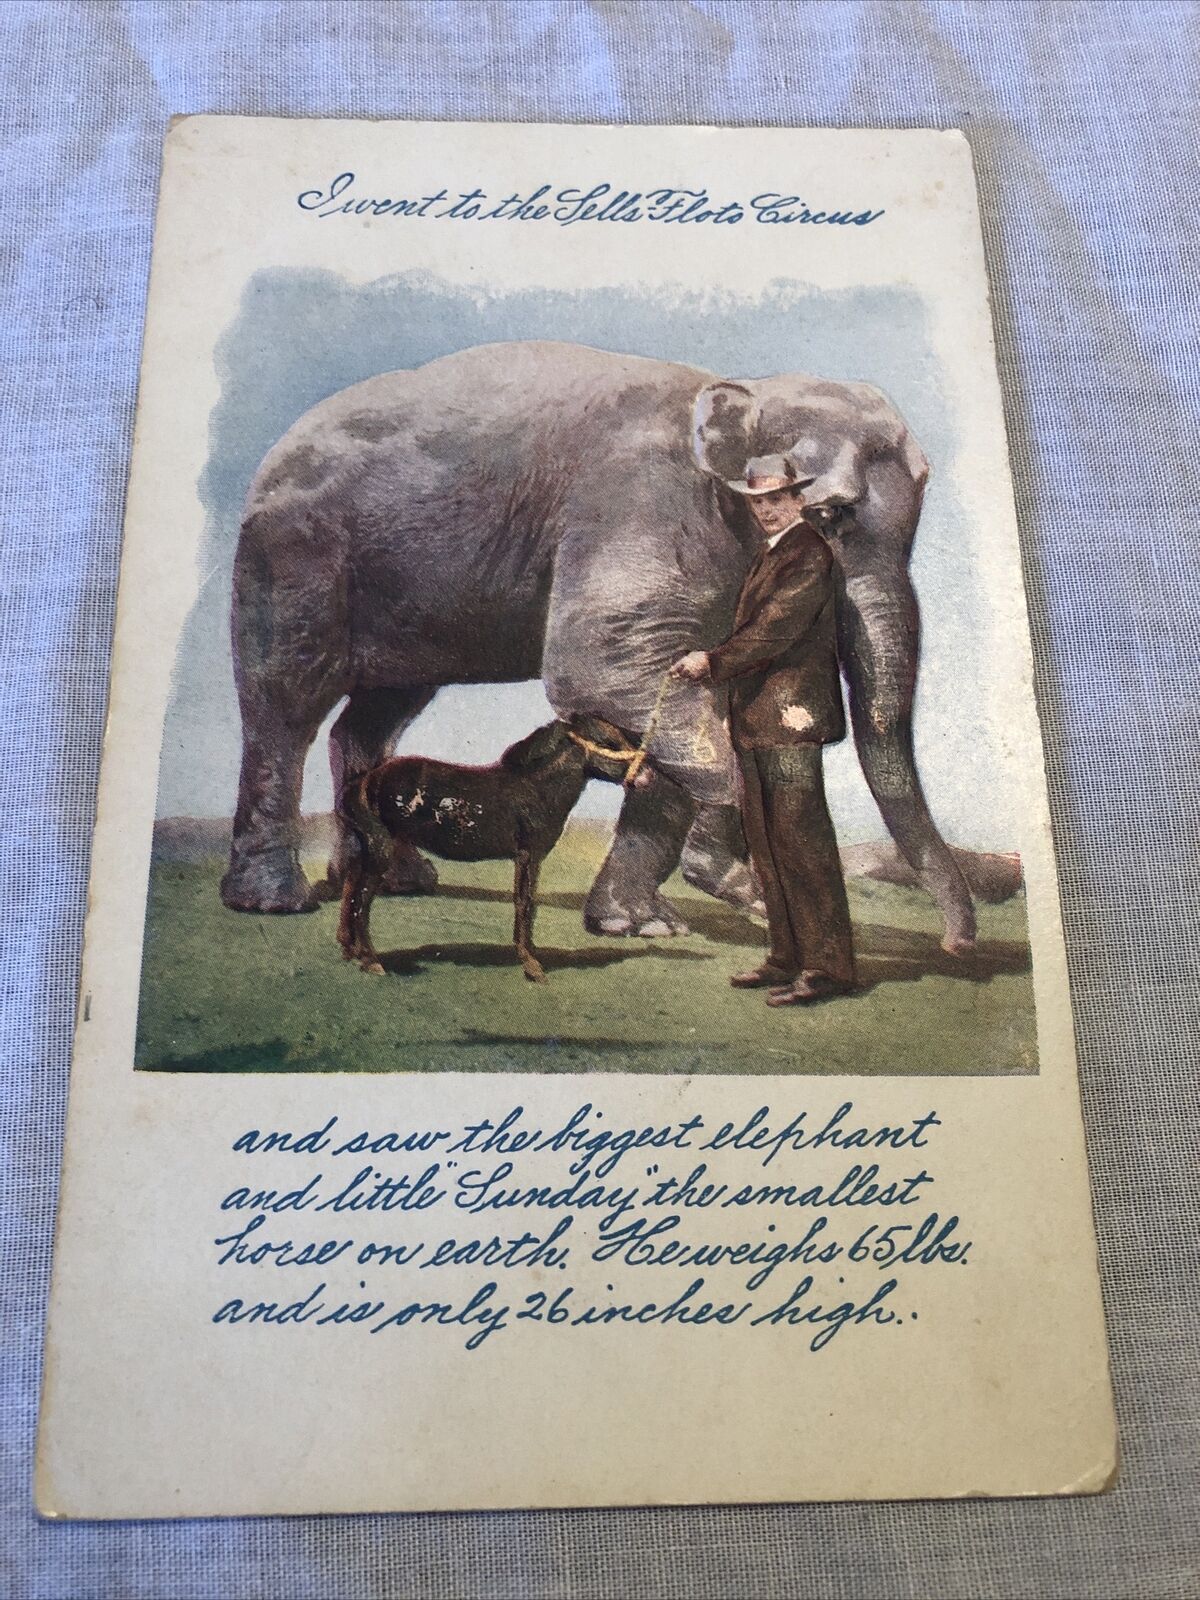 Sells Floto Circus Elephant/Horse Jefferson Texas printed 1907 Marshall embossed